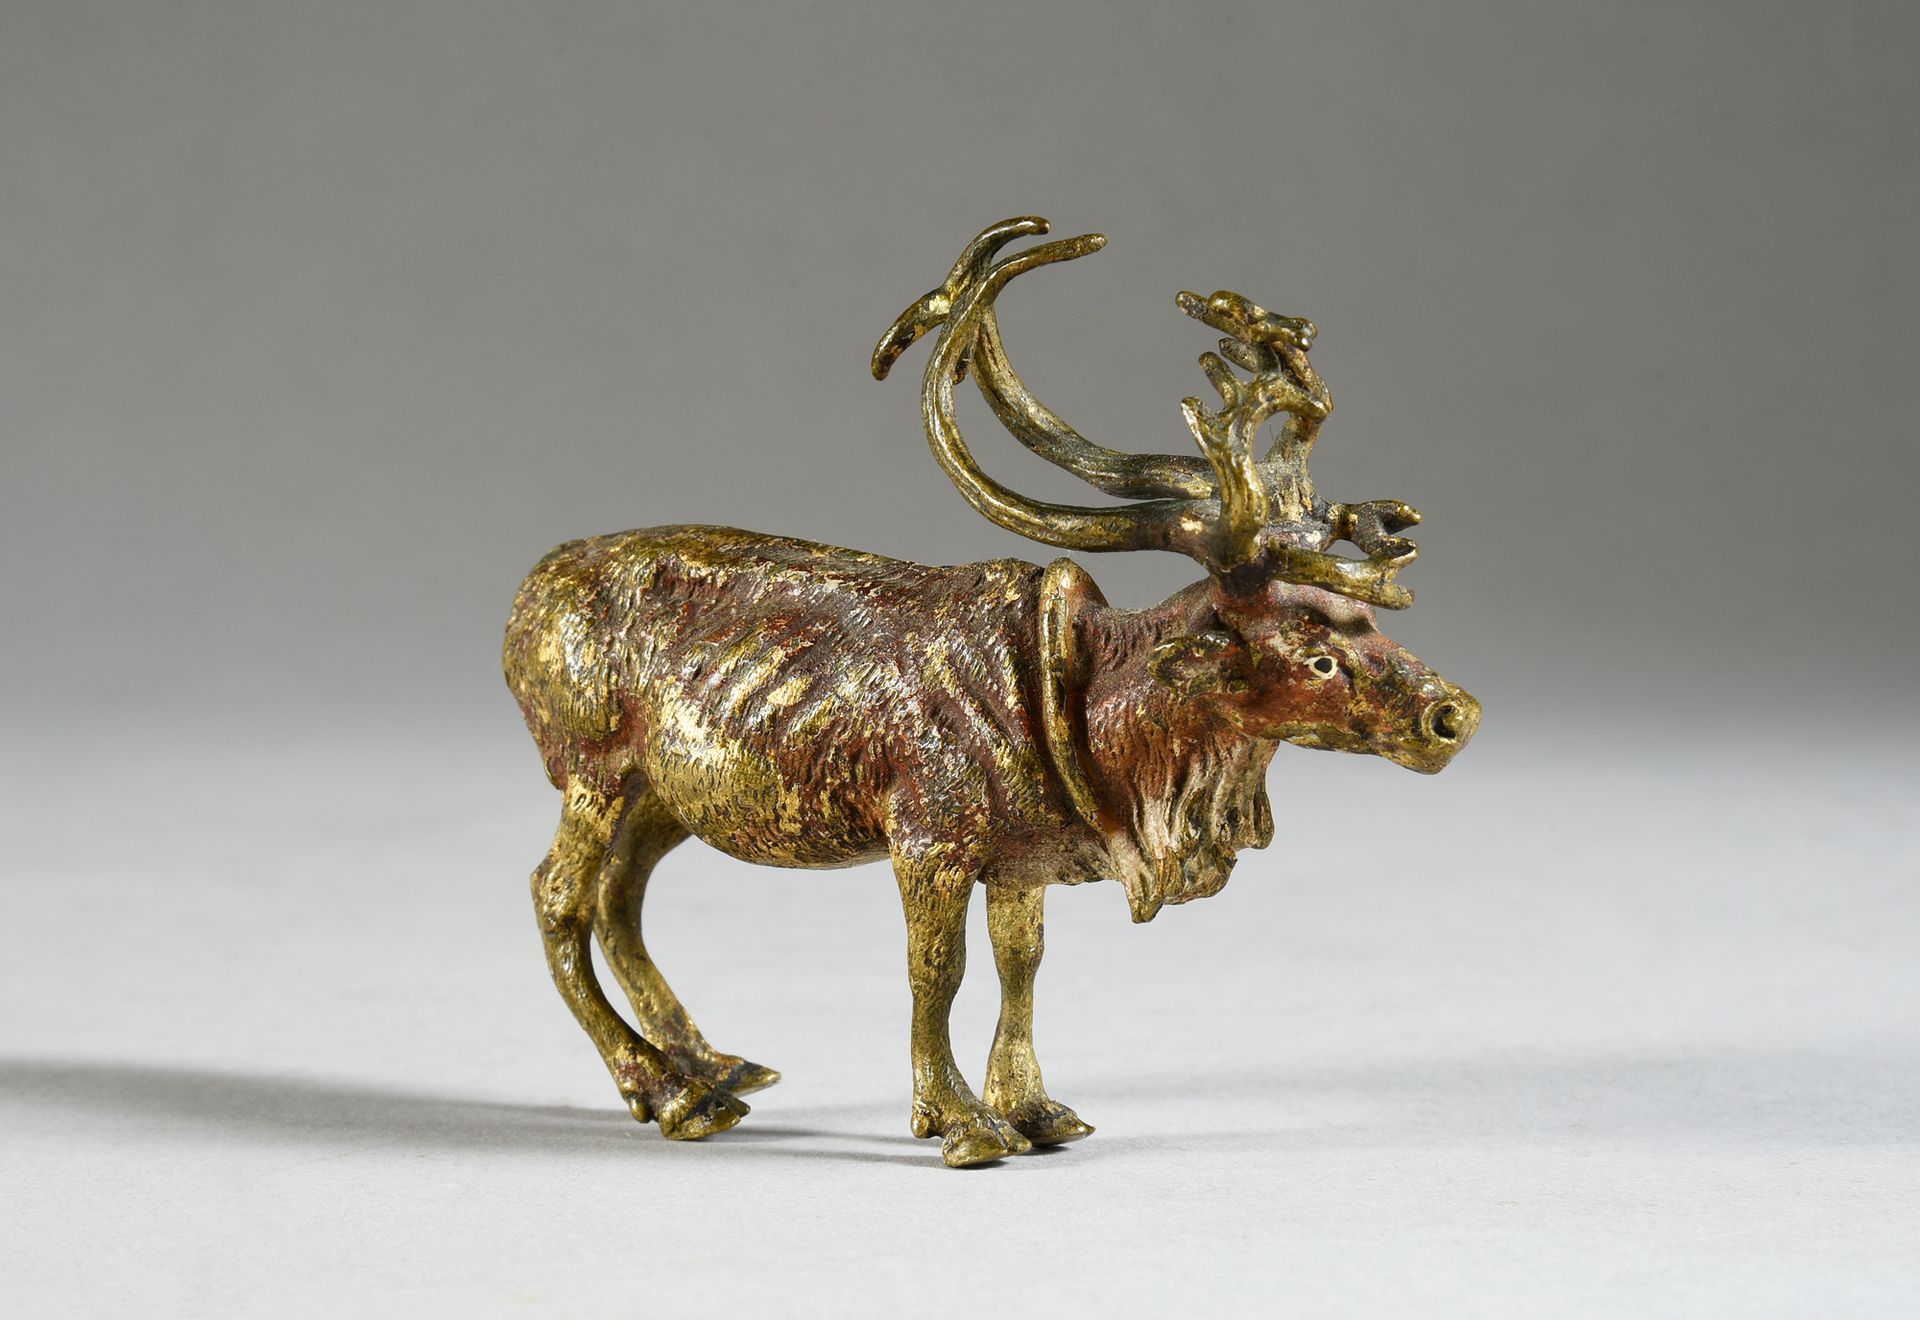 Null 维也纳青铜器。麋鹿，有多色的痕迹。
长：8.5厘米